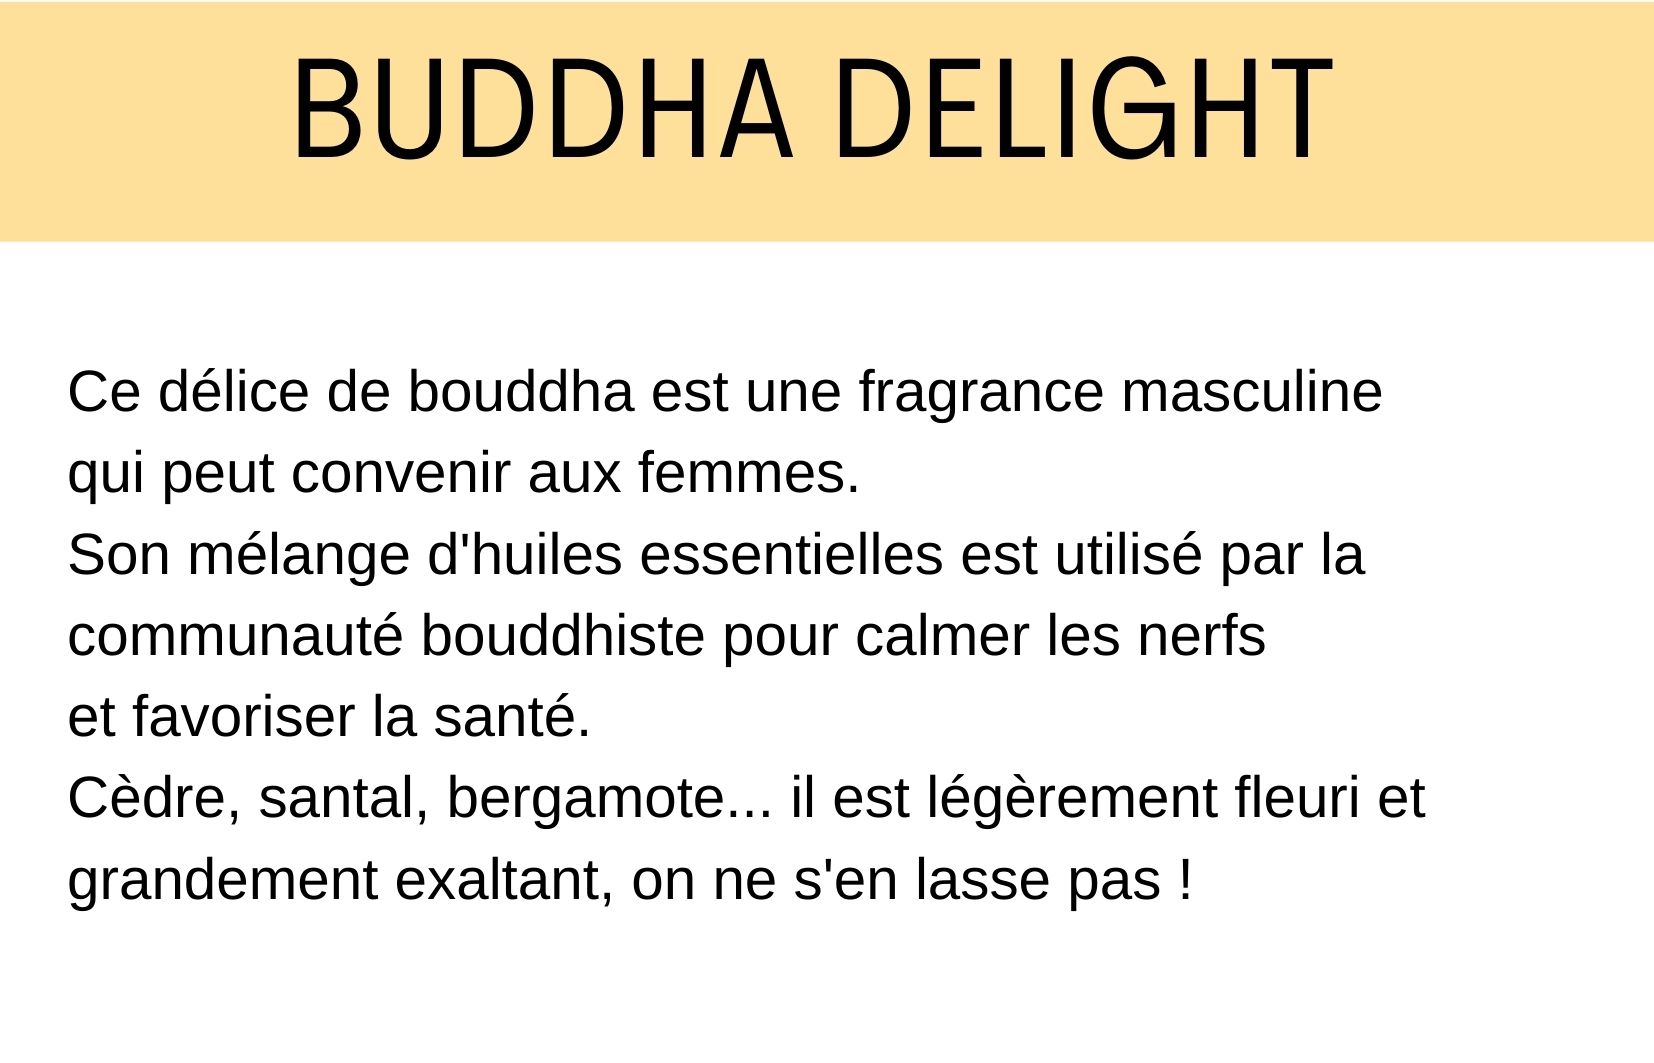 Buddha delight description parfum